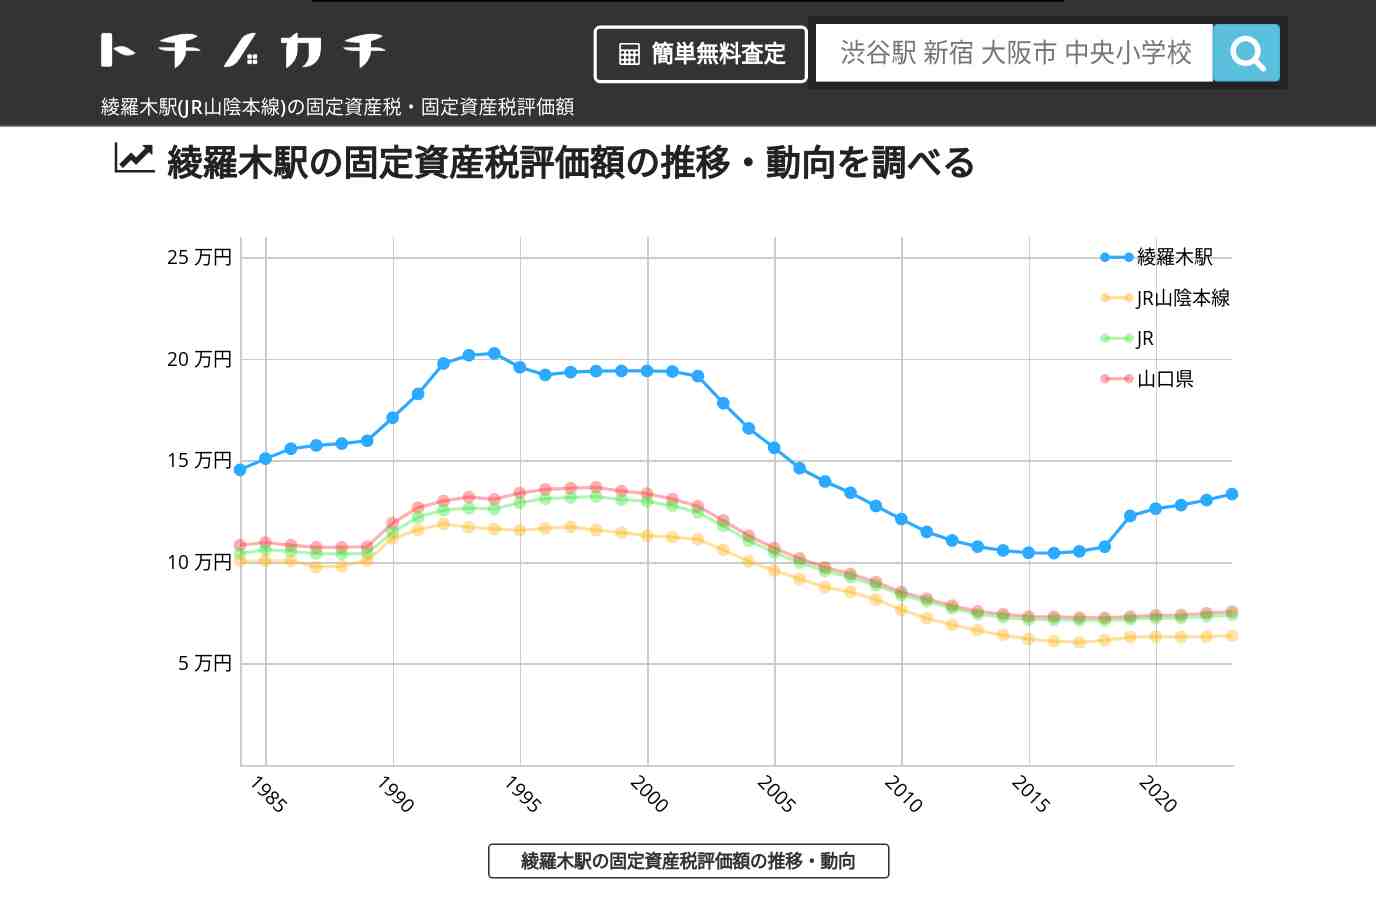 綾羅木駅(JR山陰本線)の固定資産税・固定資産税評価額 | トチノカチ